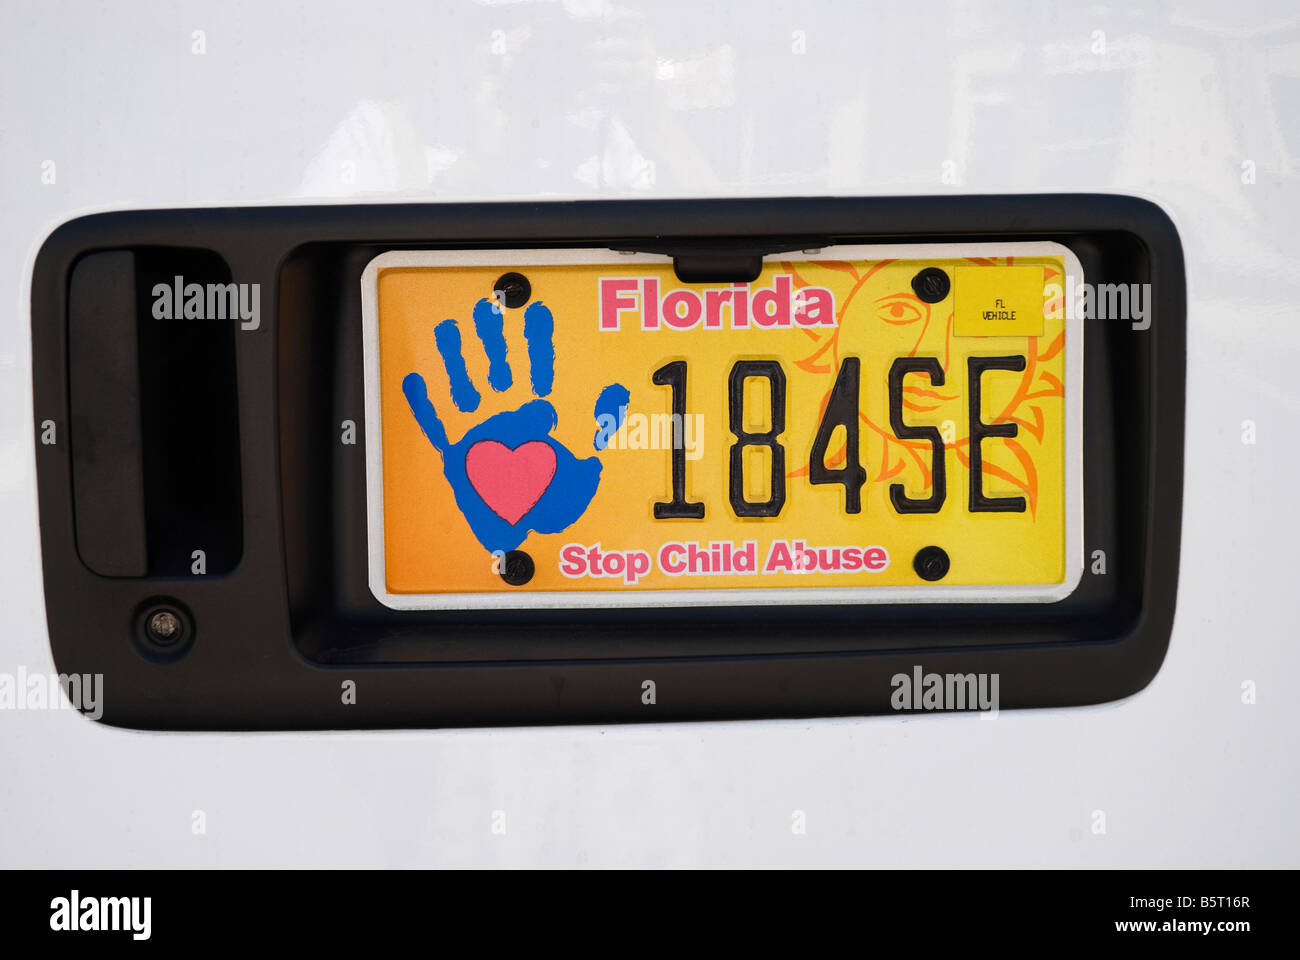 Florida stop child abuse auto tag Stock Photo